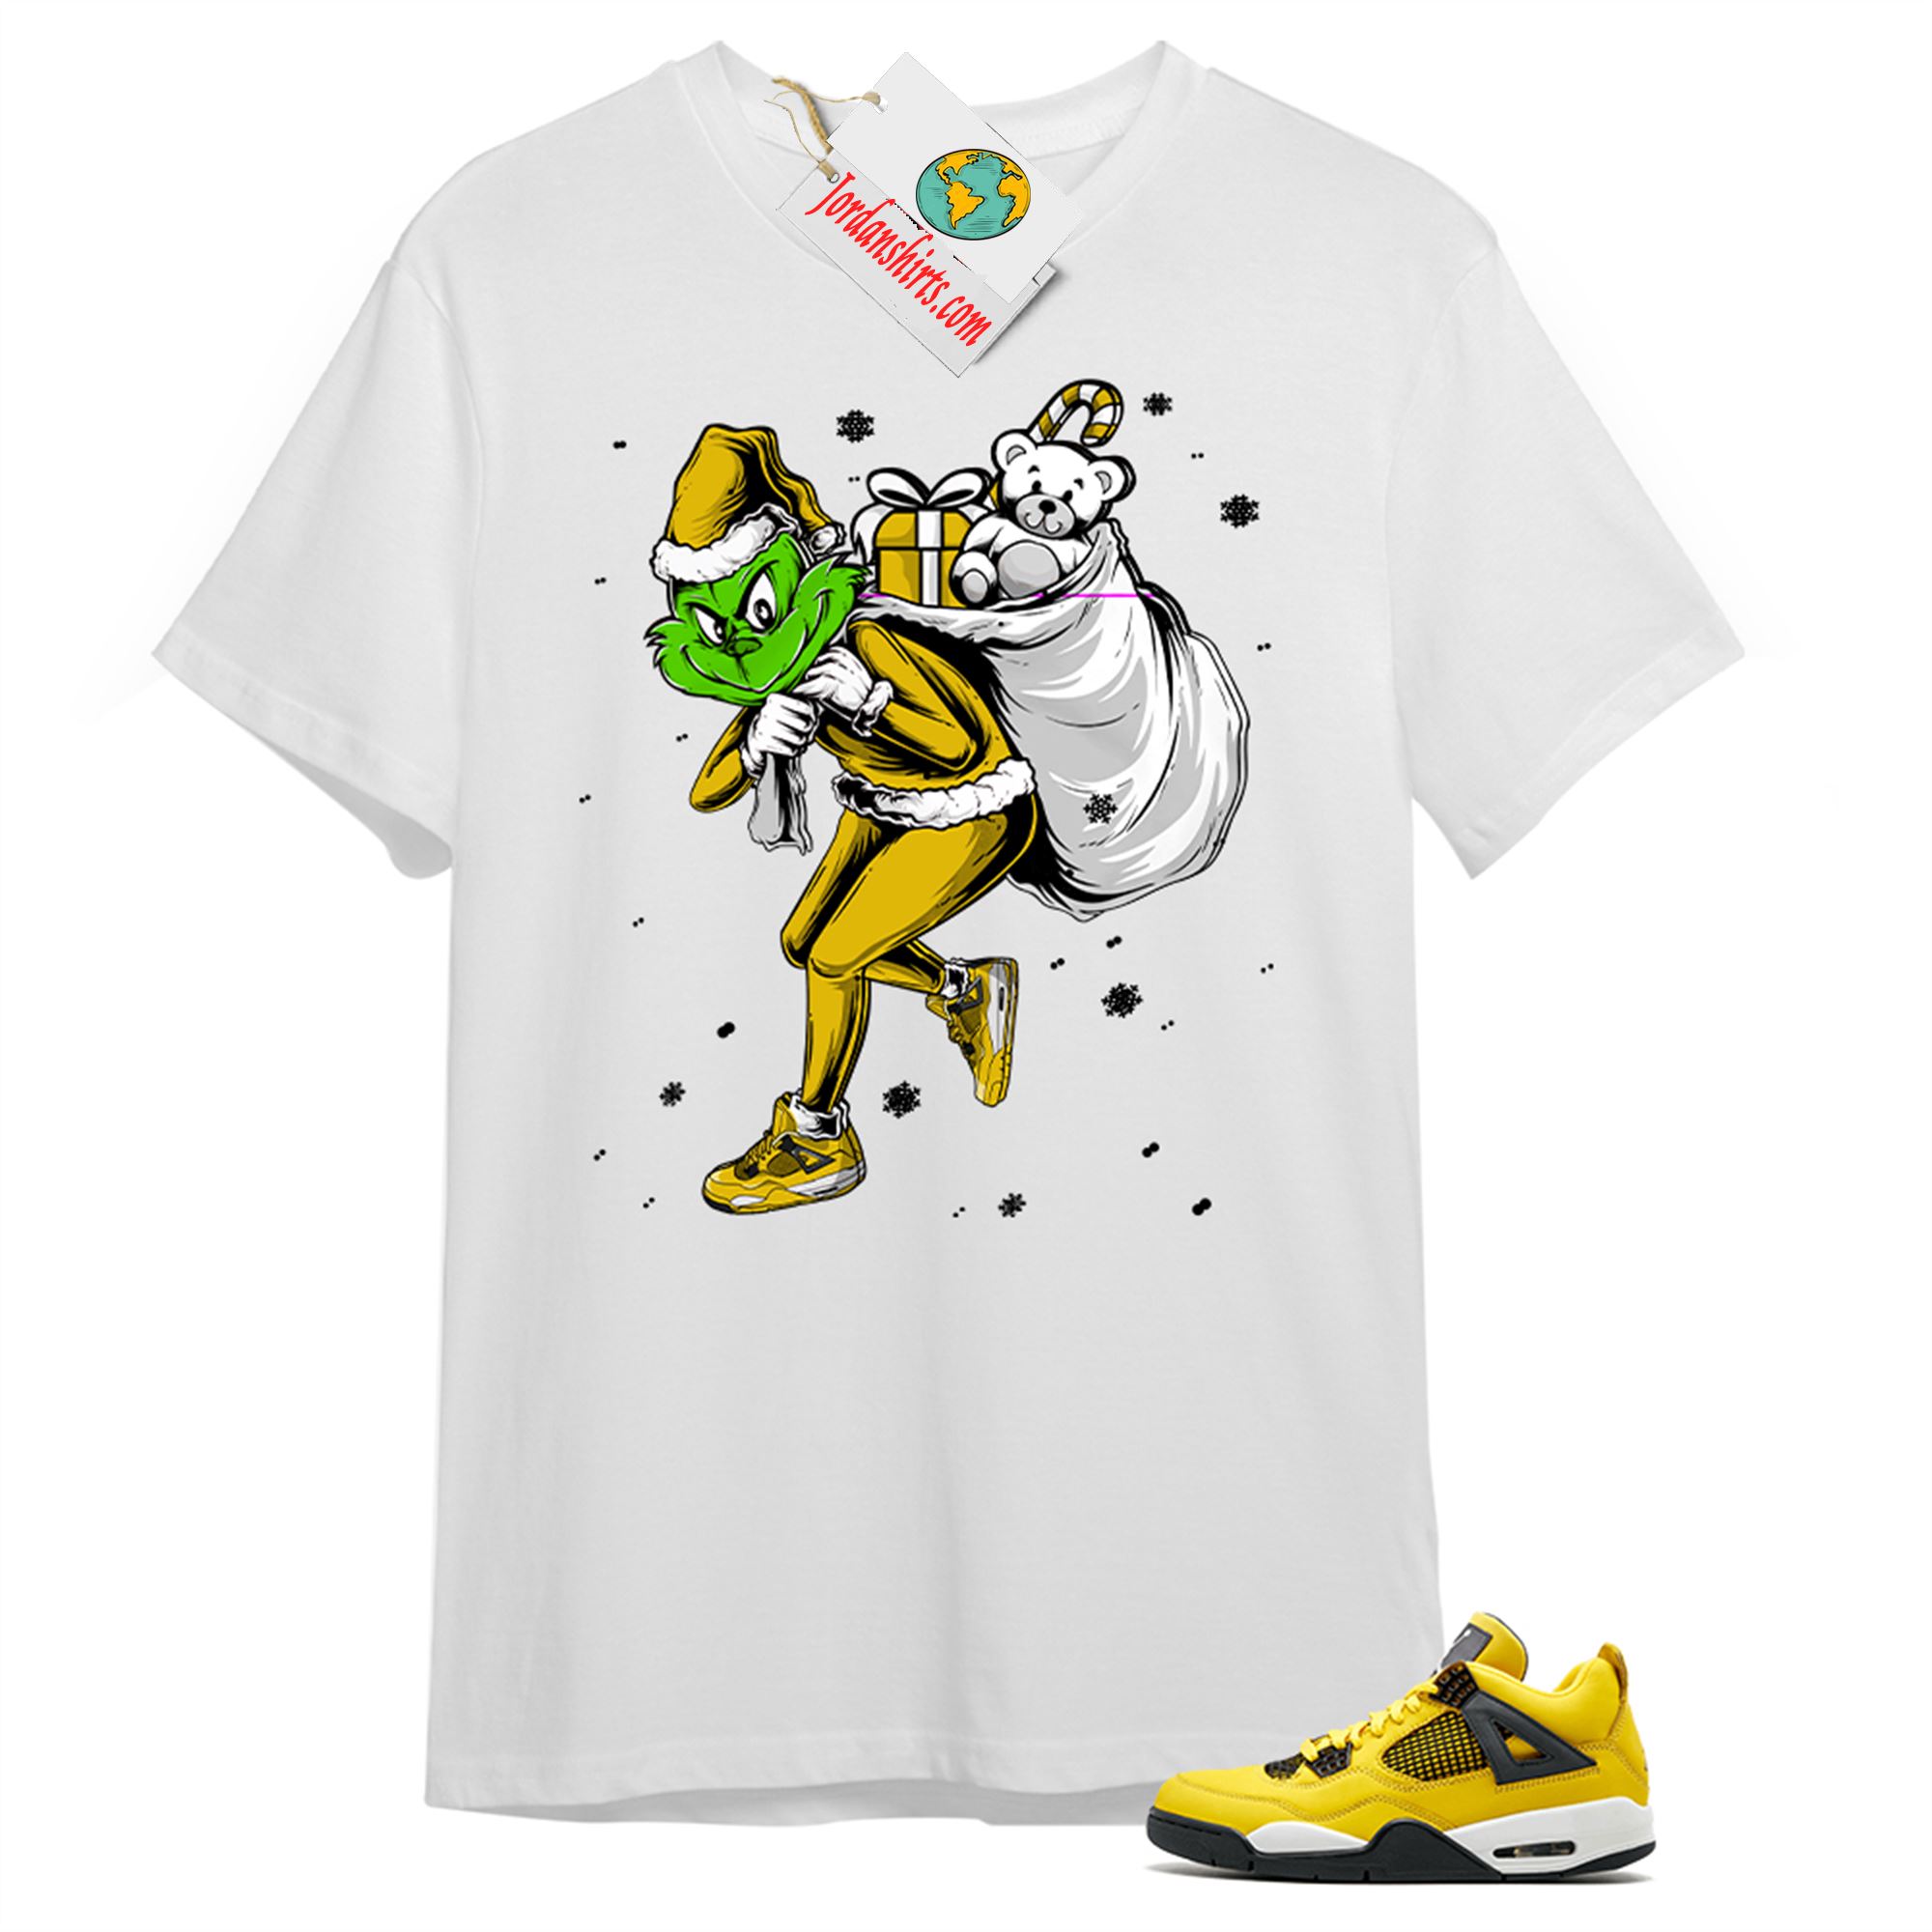 Jordan 4 Shirt, Grinch Stolen Christmas White T-shirt Air Jordan 4 Tour Yellow Lightning 4s Full Size Up To 5xl